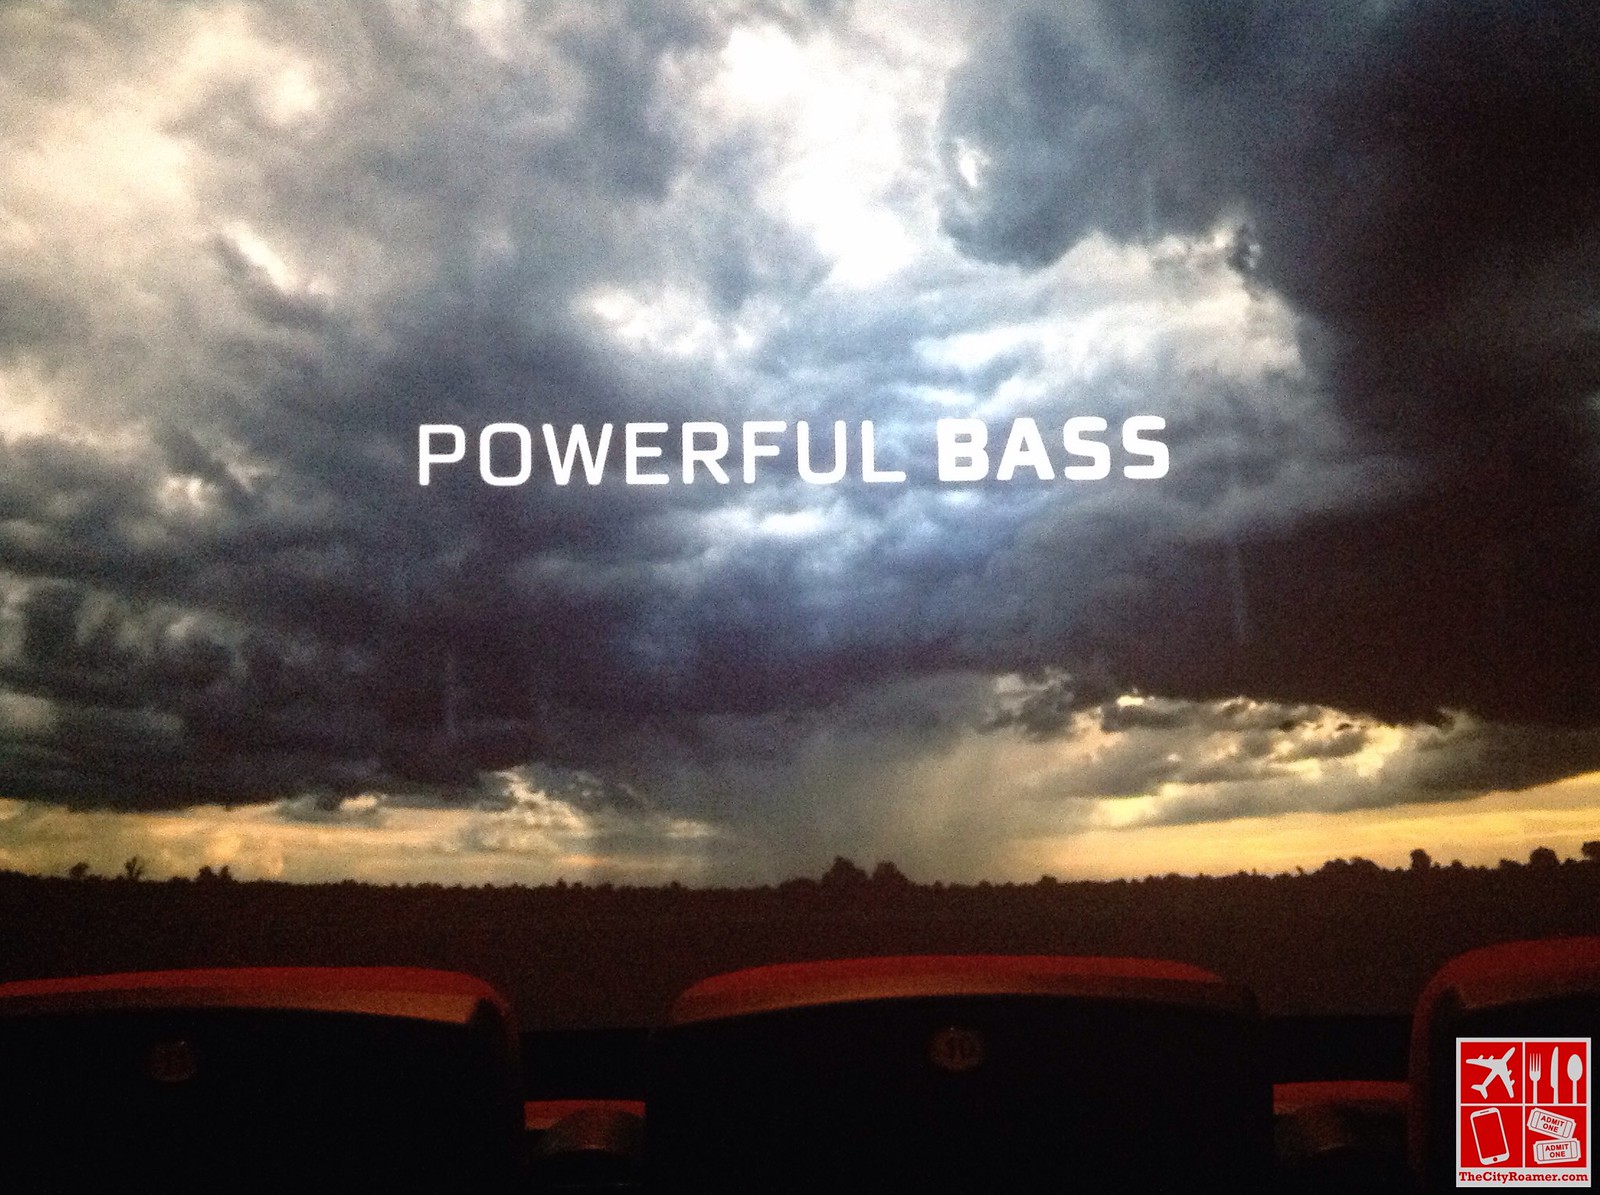 Dolby Atmos has Powerful Bass